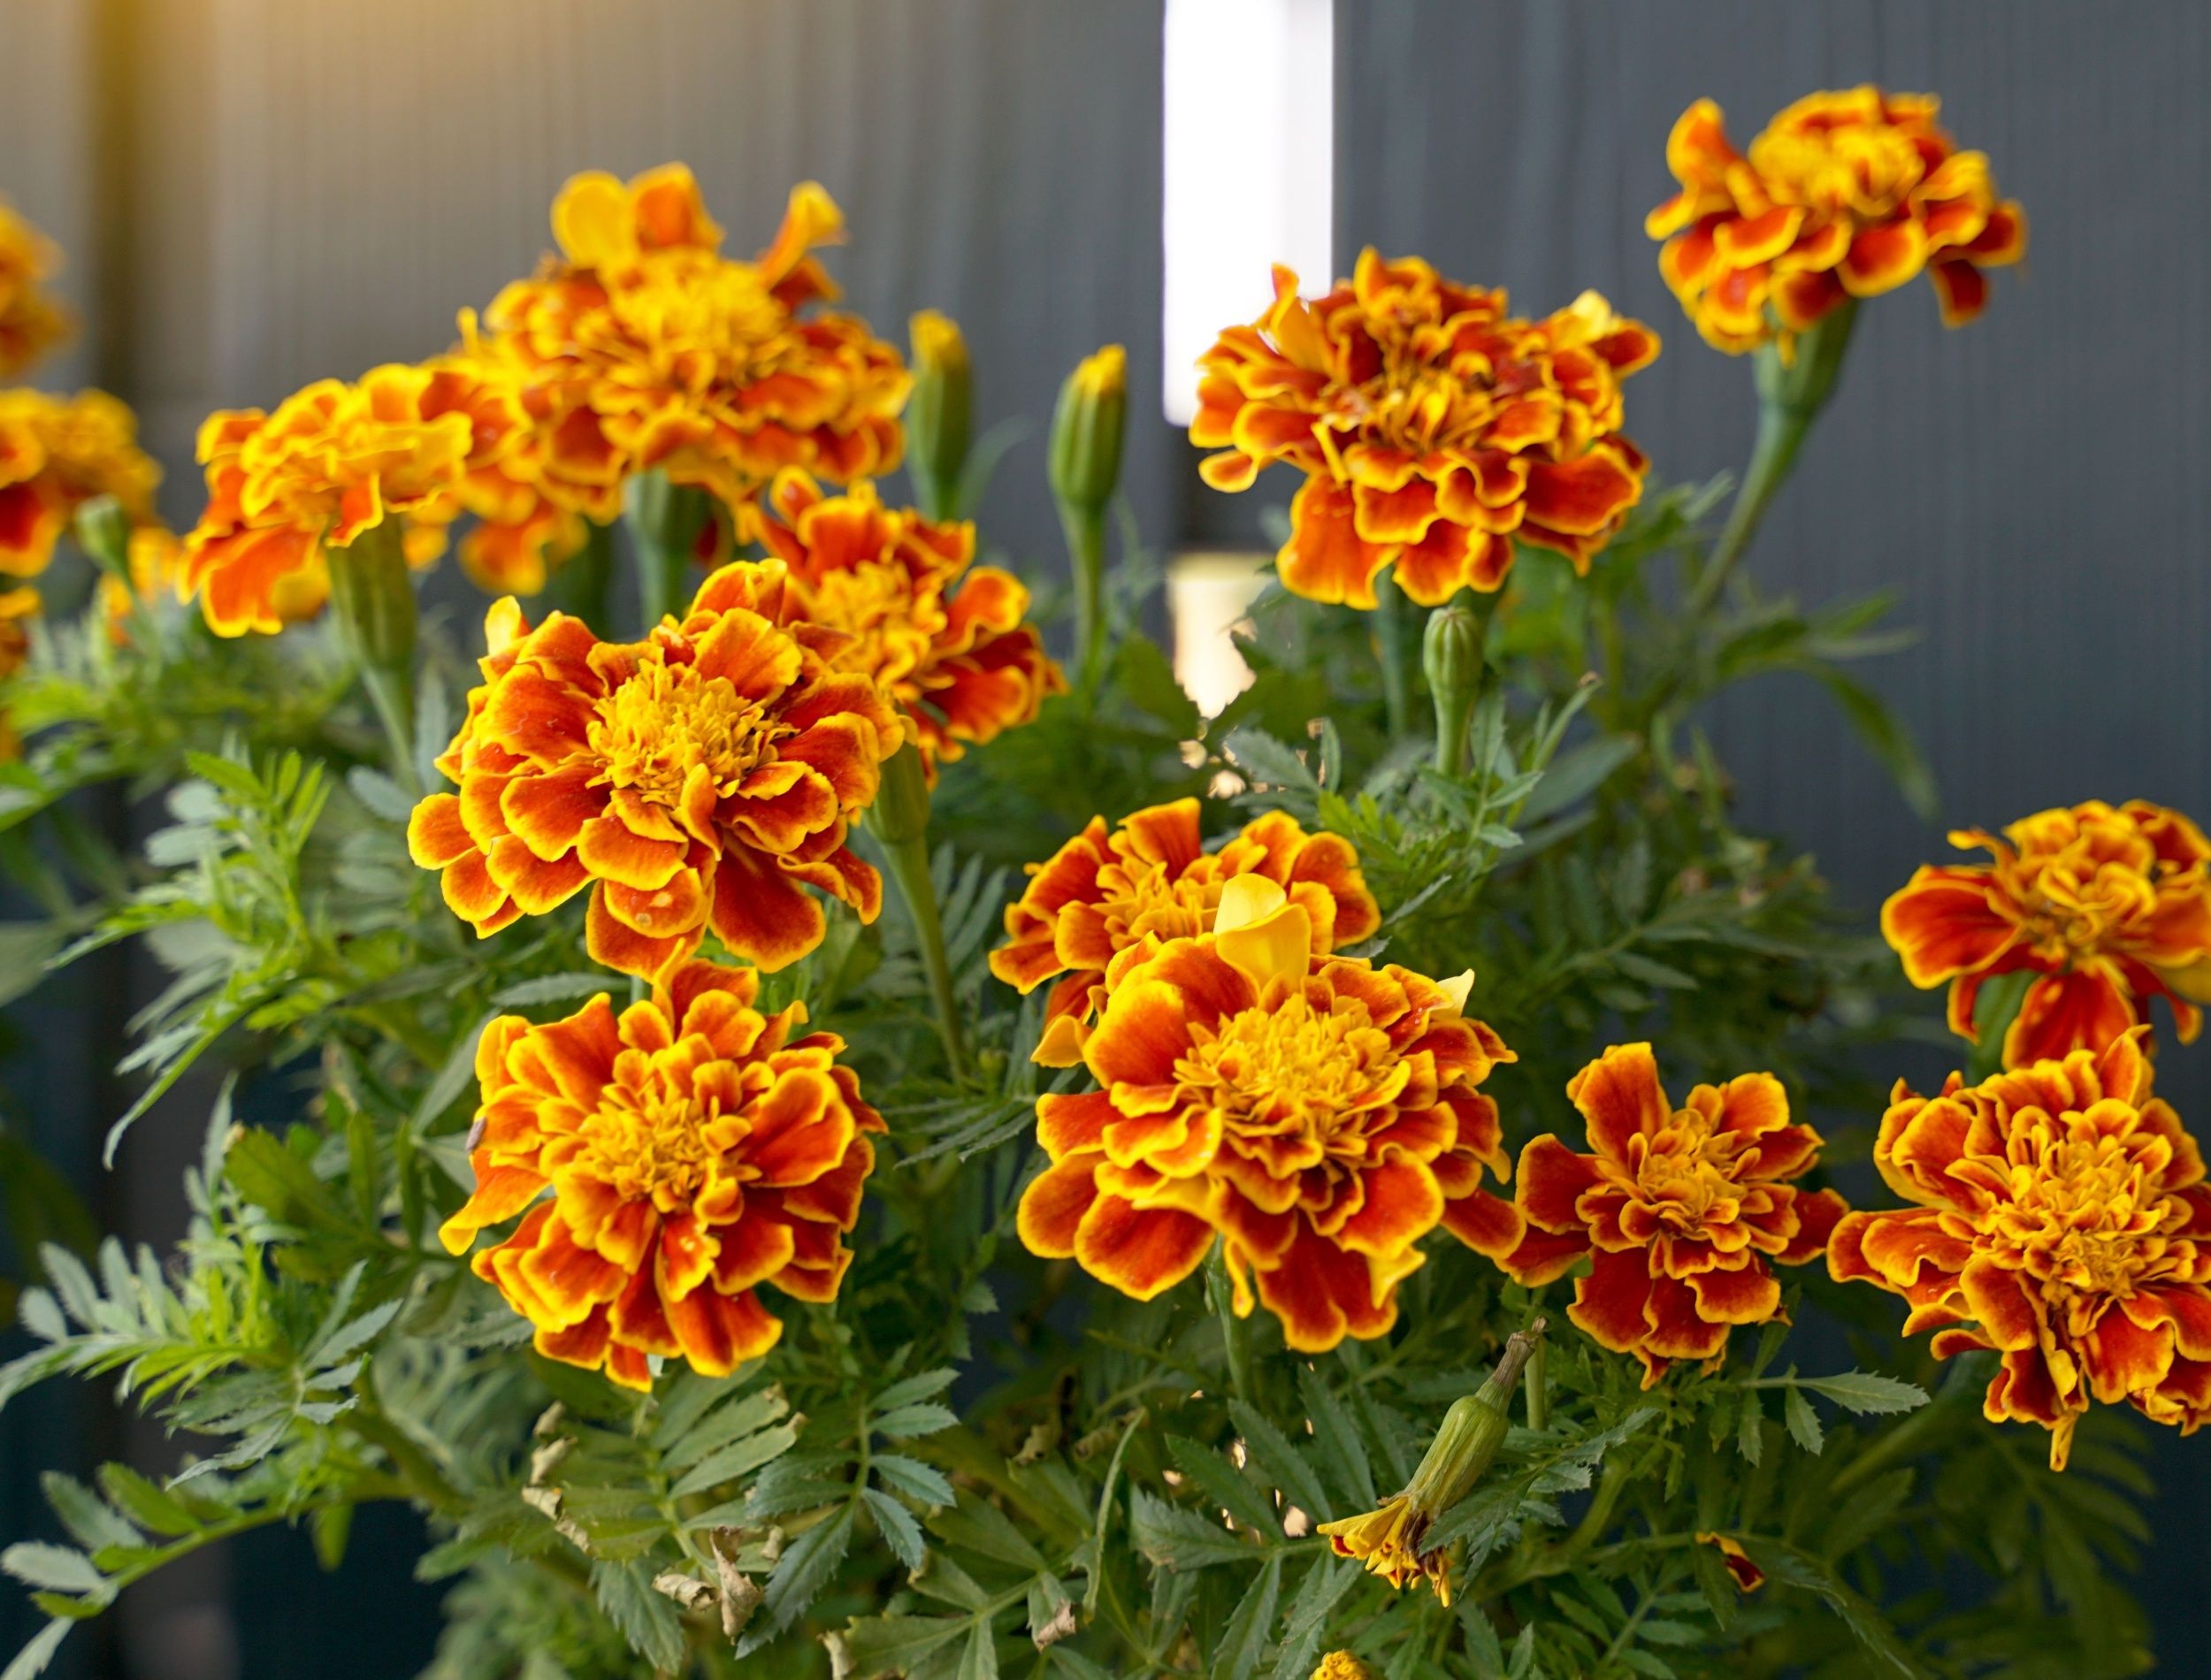 planted marigolds 